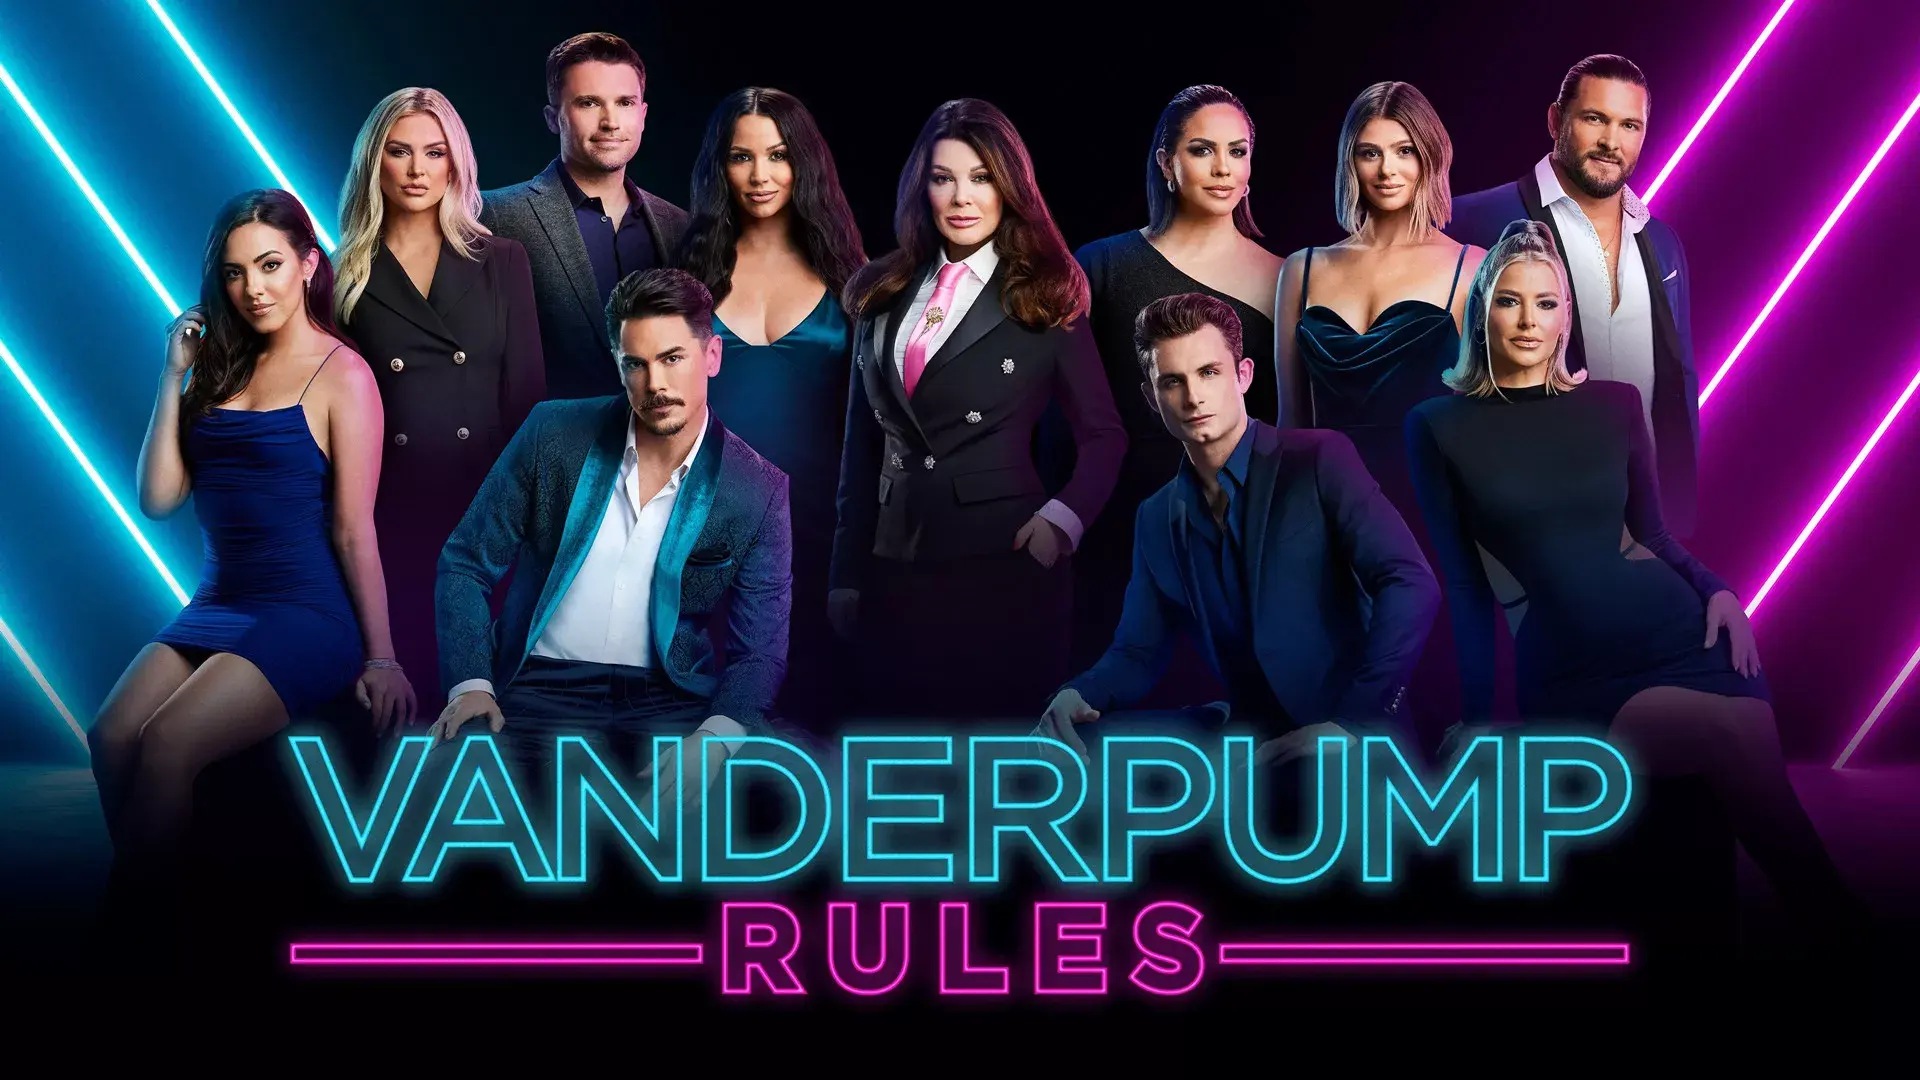 Vanderpump Rules 在美国很火的电视真人秀节目